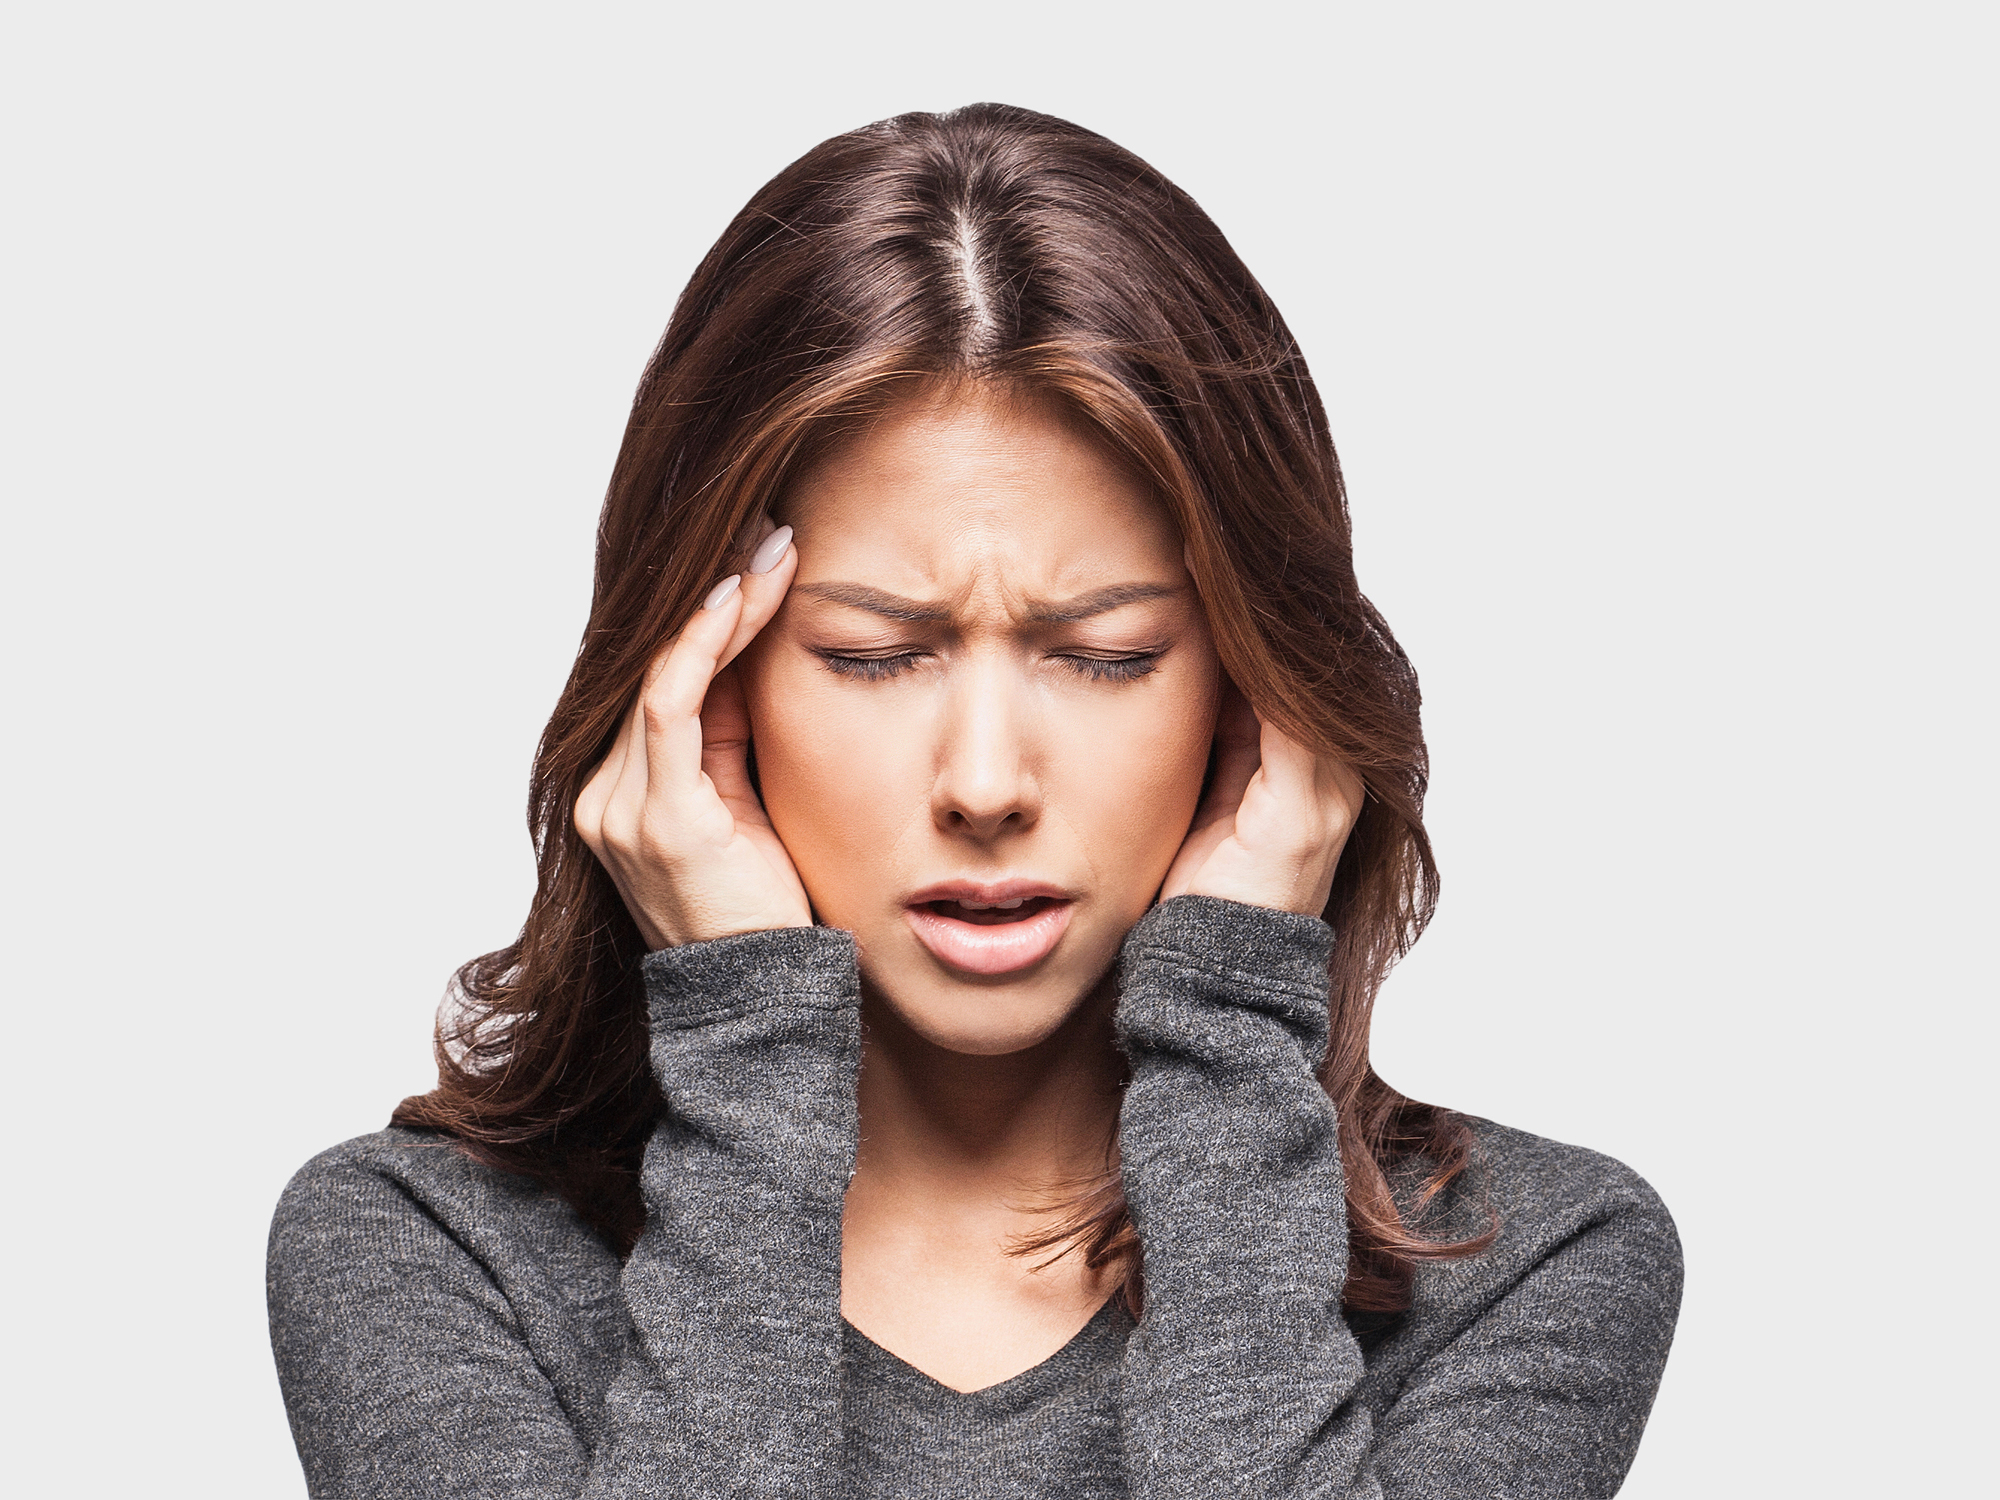 6 foods that make headaches worse